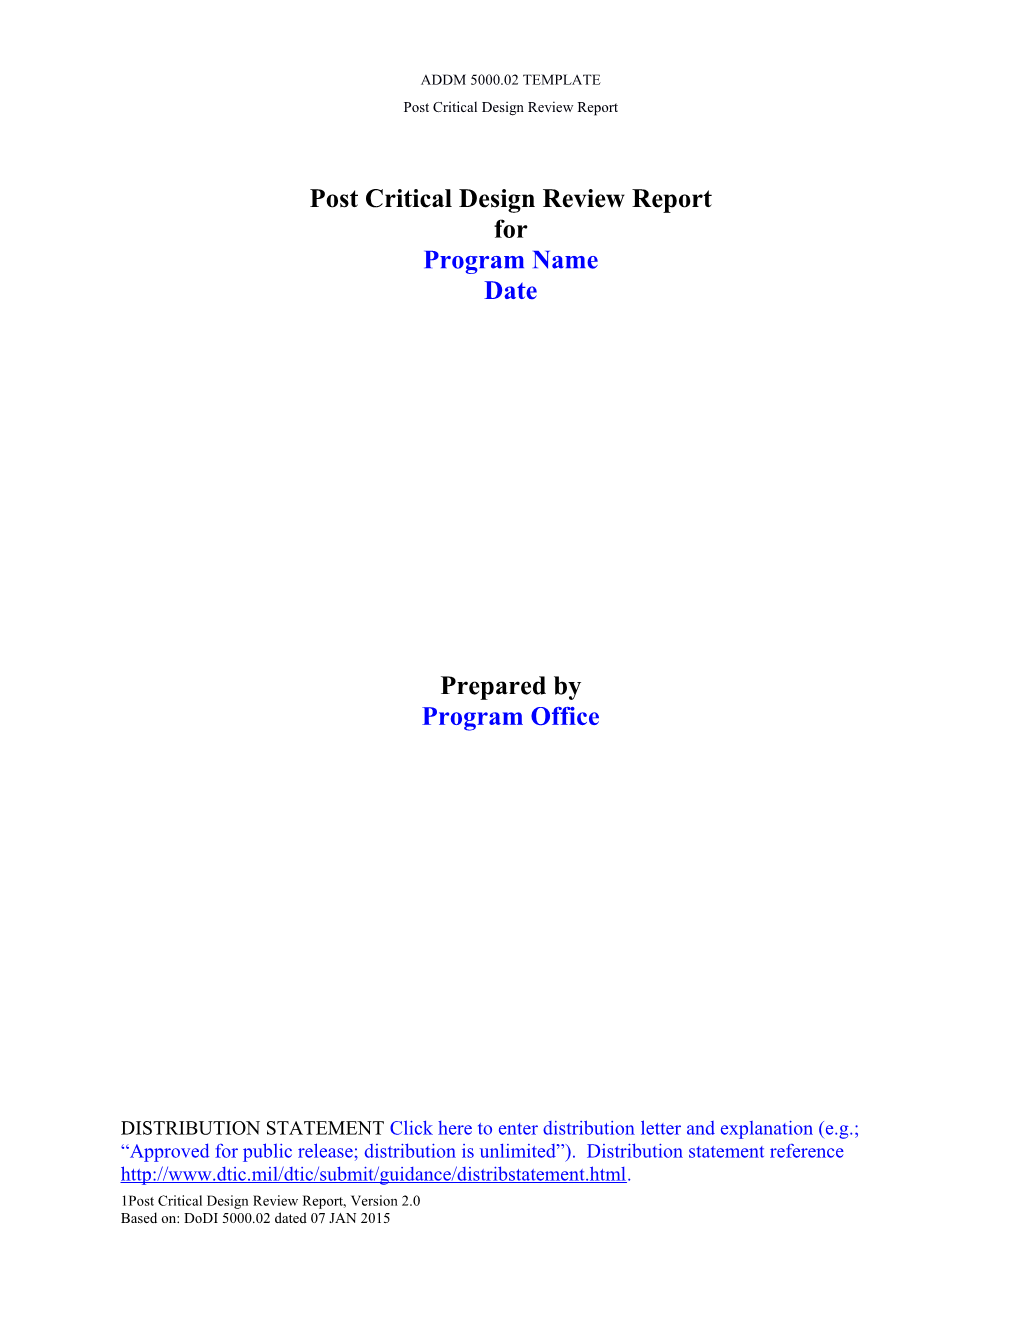 Post-CDR Report ADDM Template V 2.0